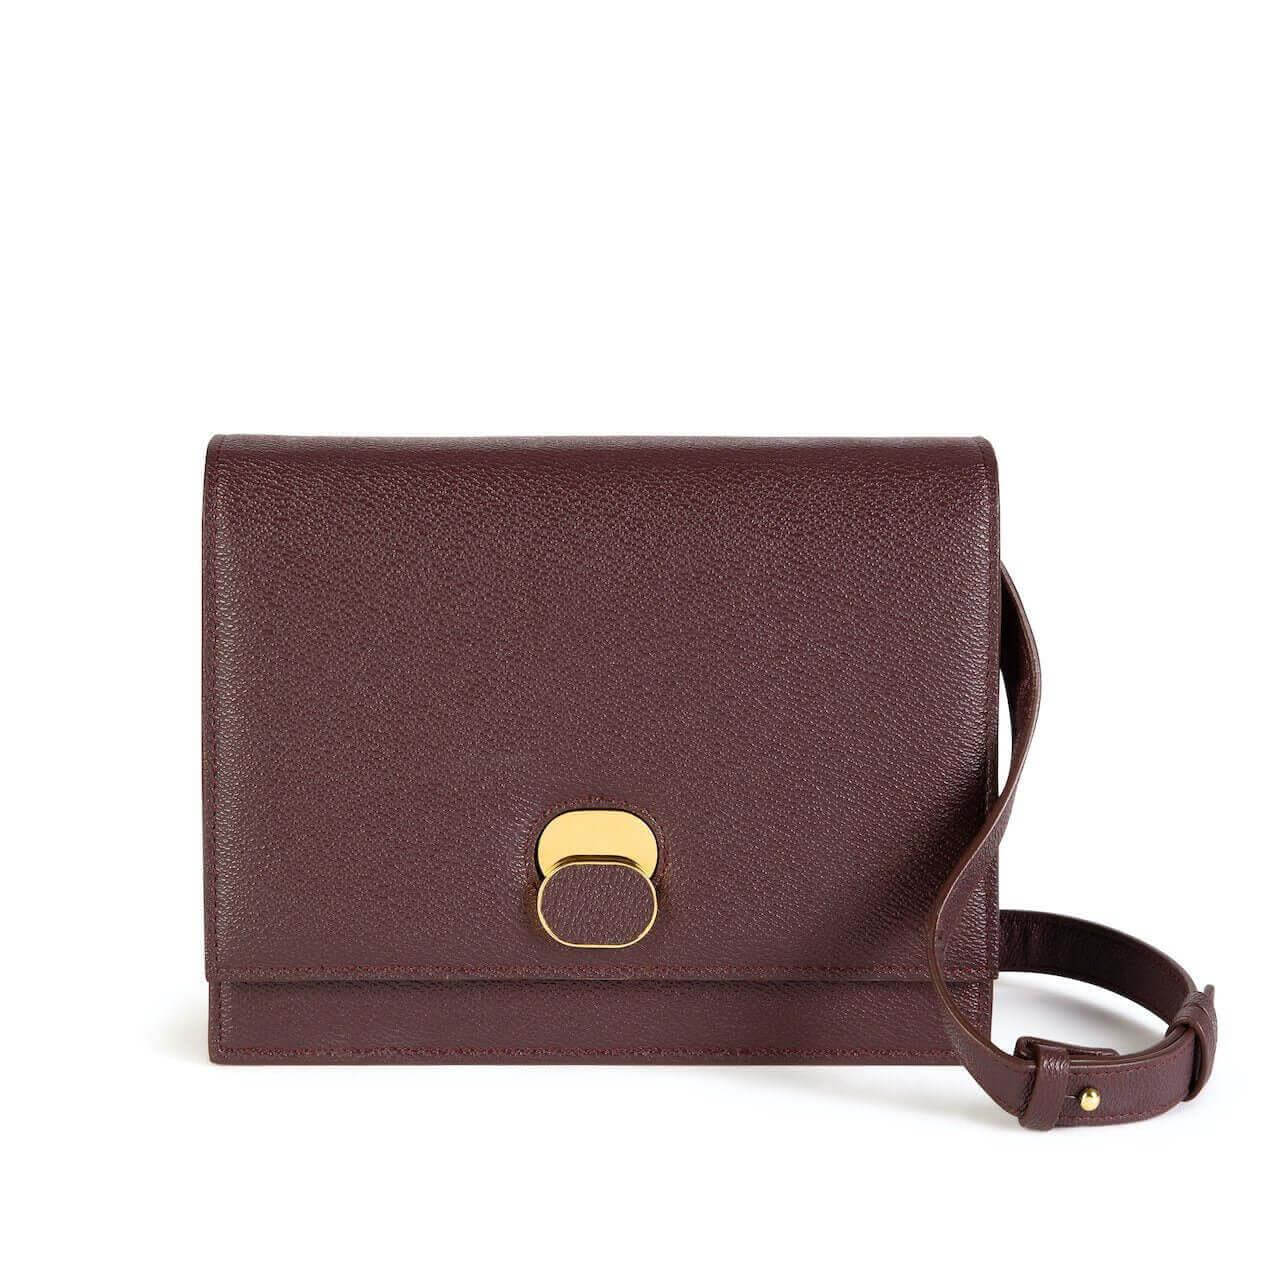 Nyx- Black Apple Leather Handbag | Vegan Leather Designer Handbag at Rs  11995.00 | Women Leather Handbags, महिलाओं का चमड़े का हैंडबैग - Living  Brown Private Limited, Mumbai | ID: 2851885199055